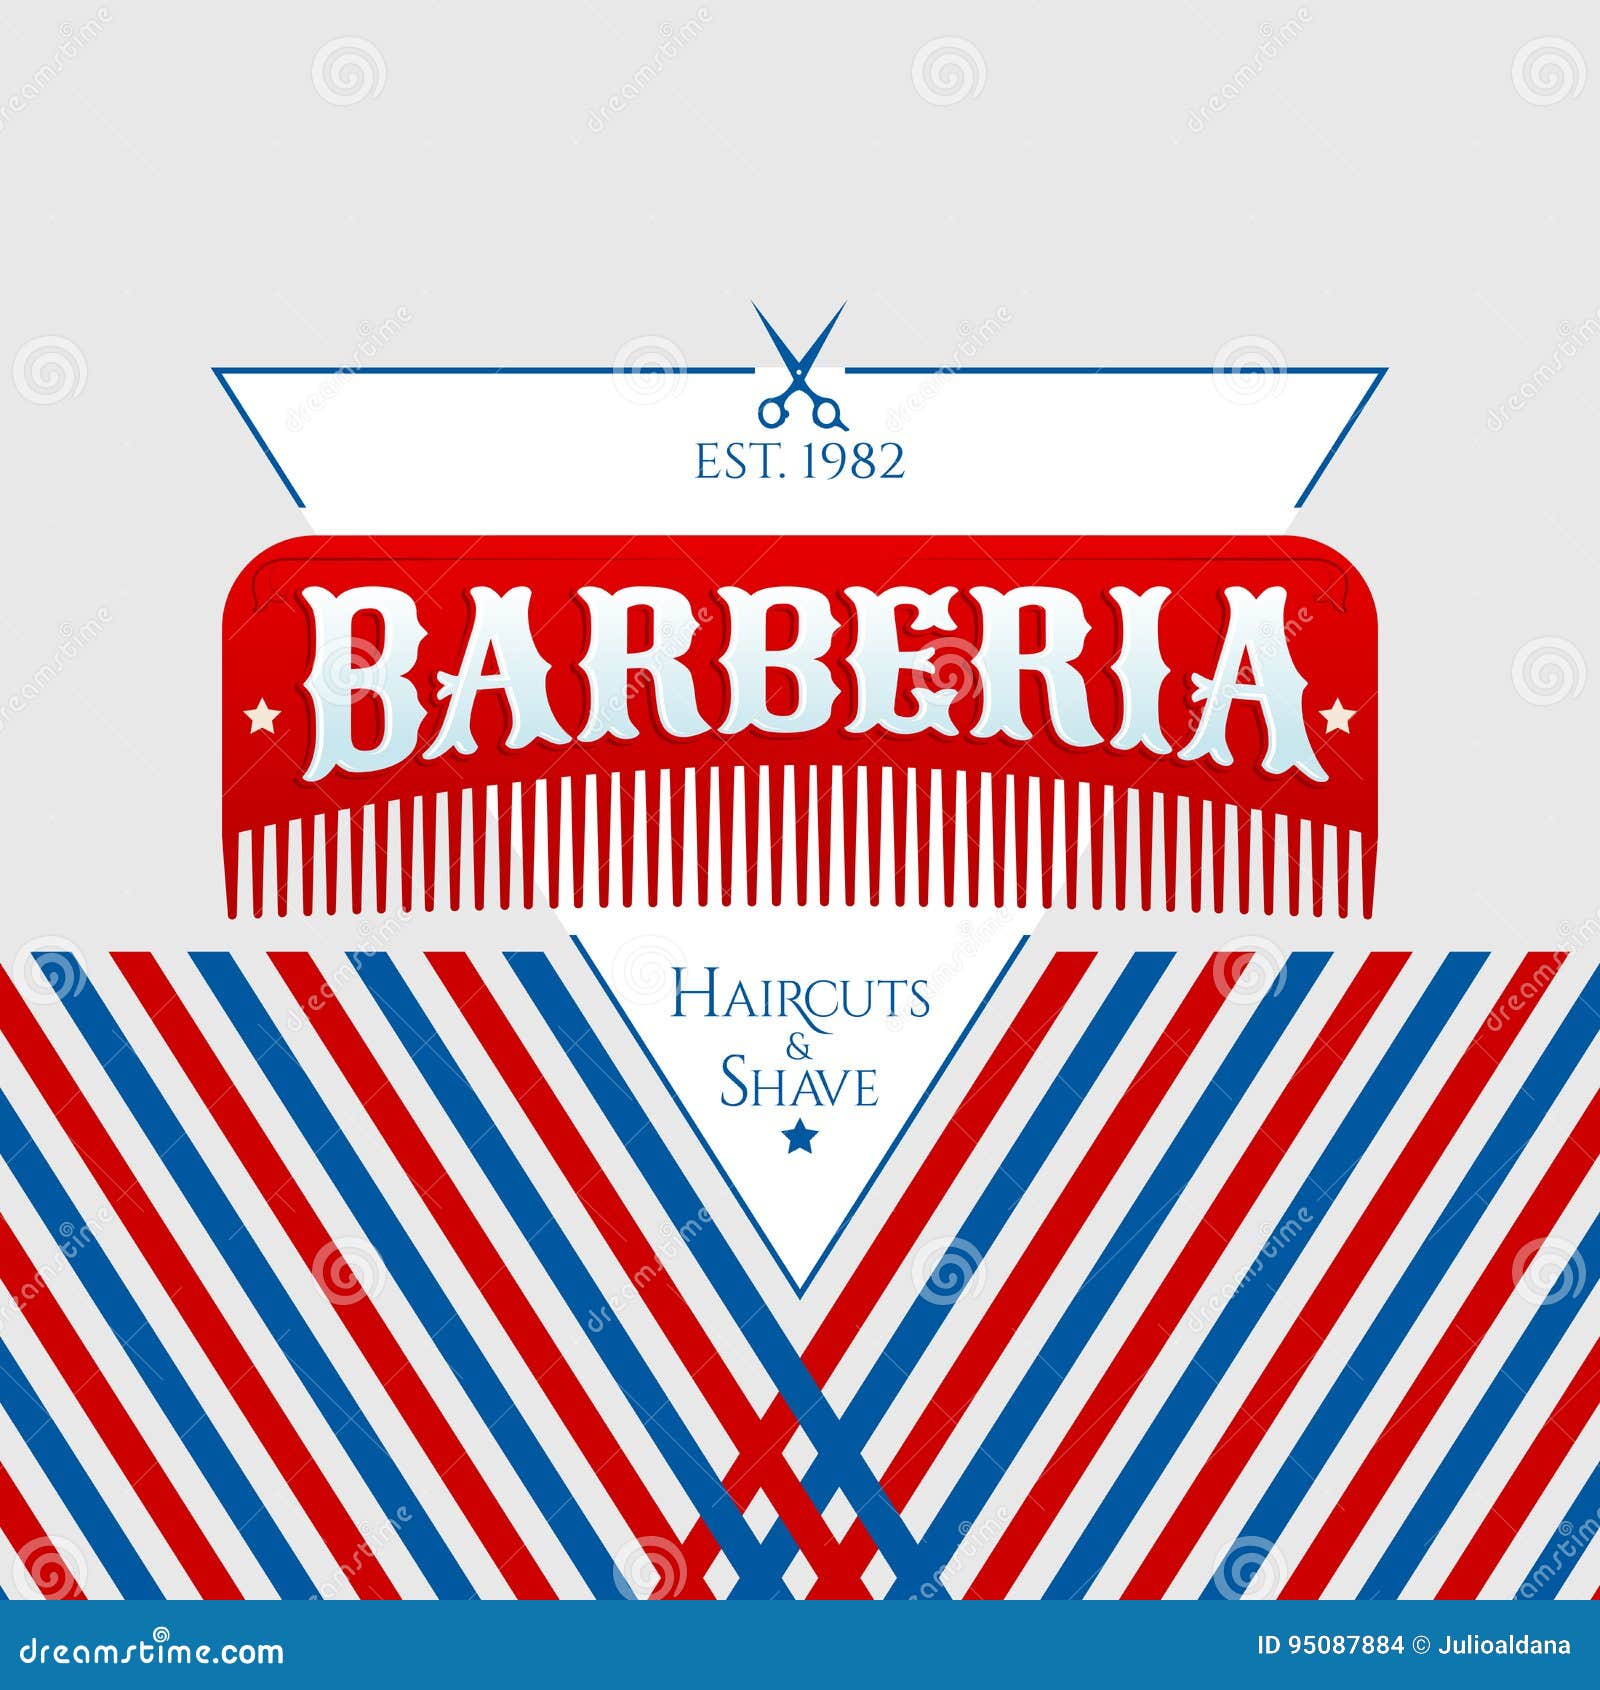 barberia, barbershop spanish text